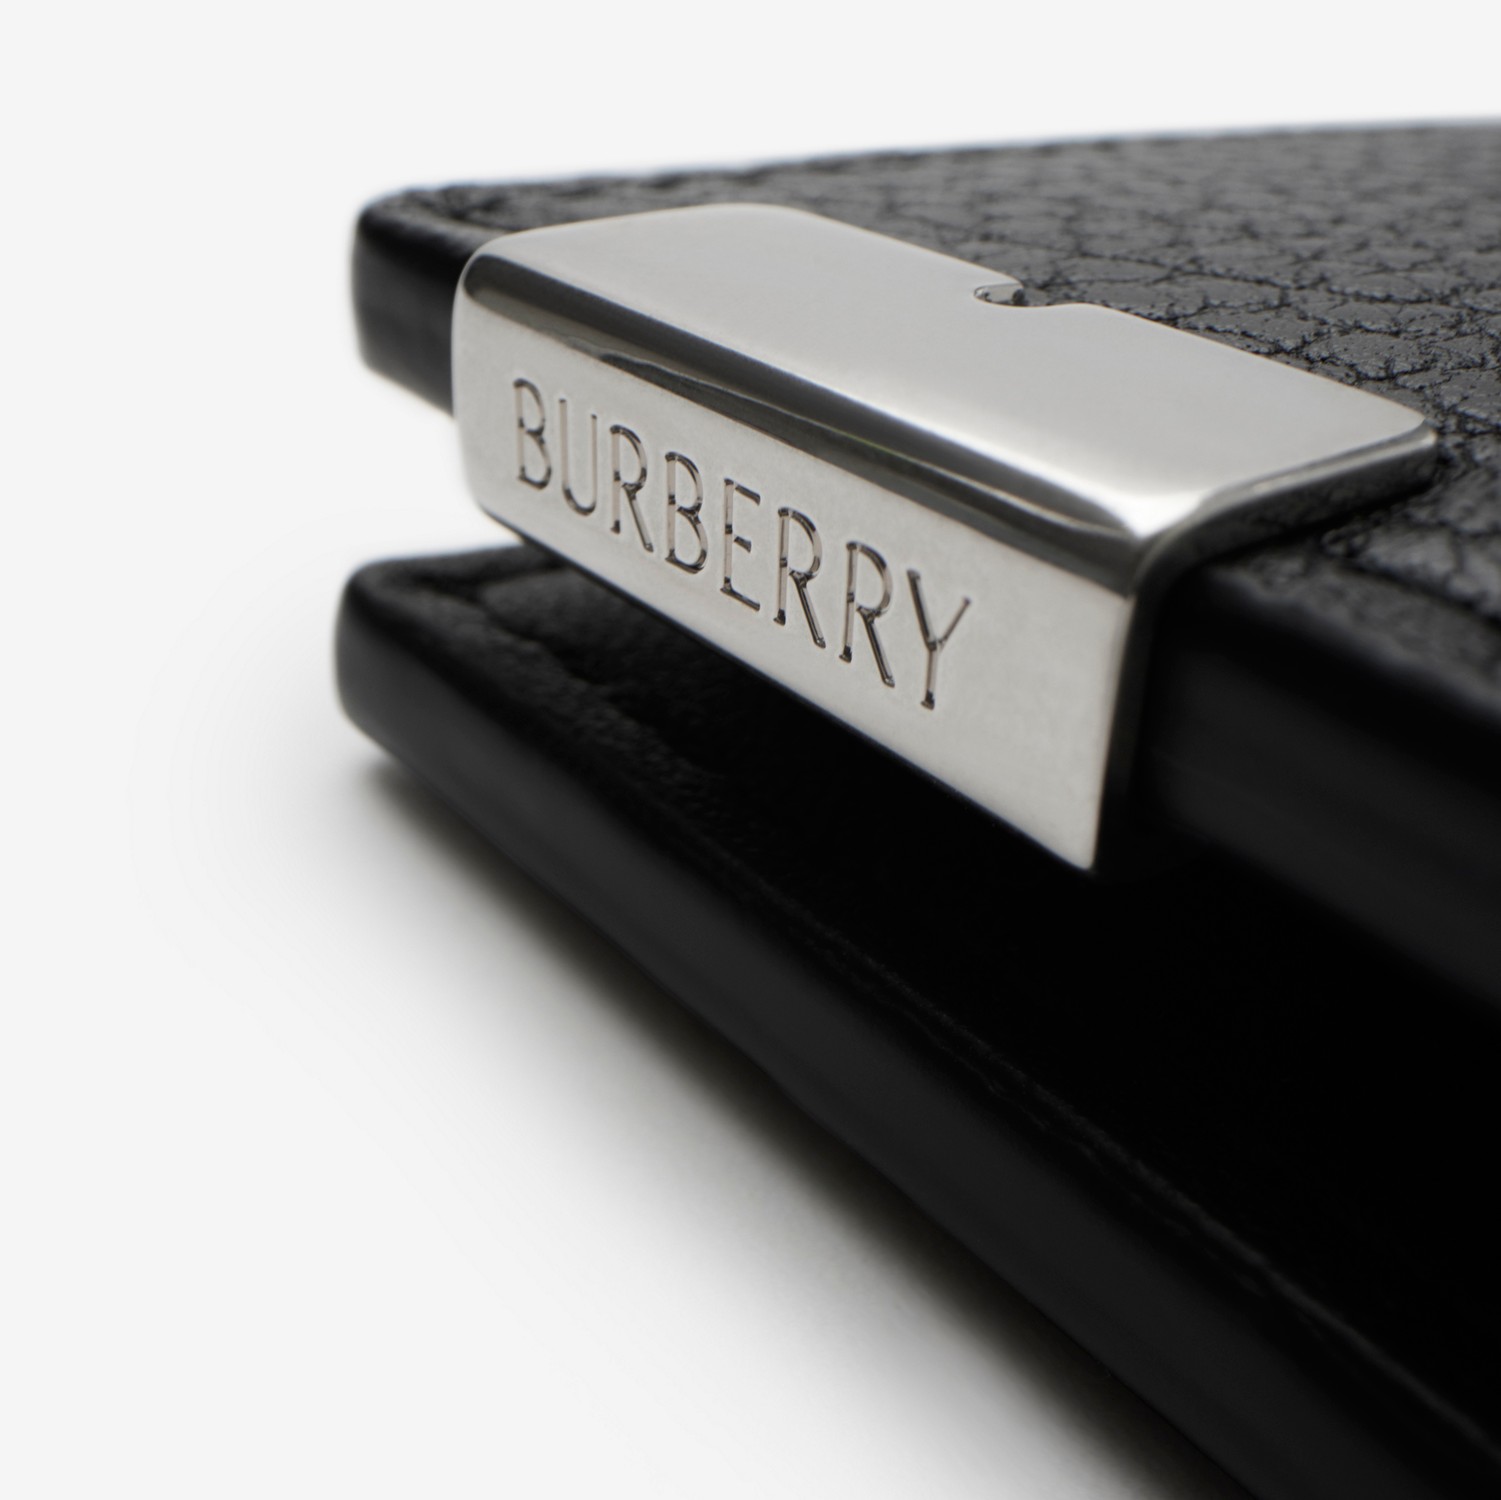 B Cut Bifold Coin Wallet in Black - Men | Burberry® Official